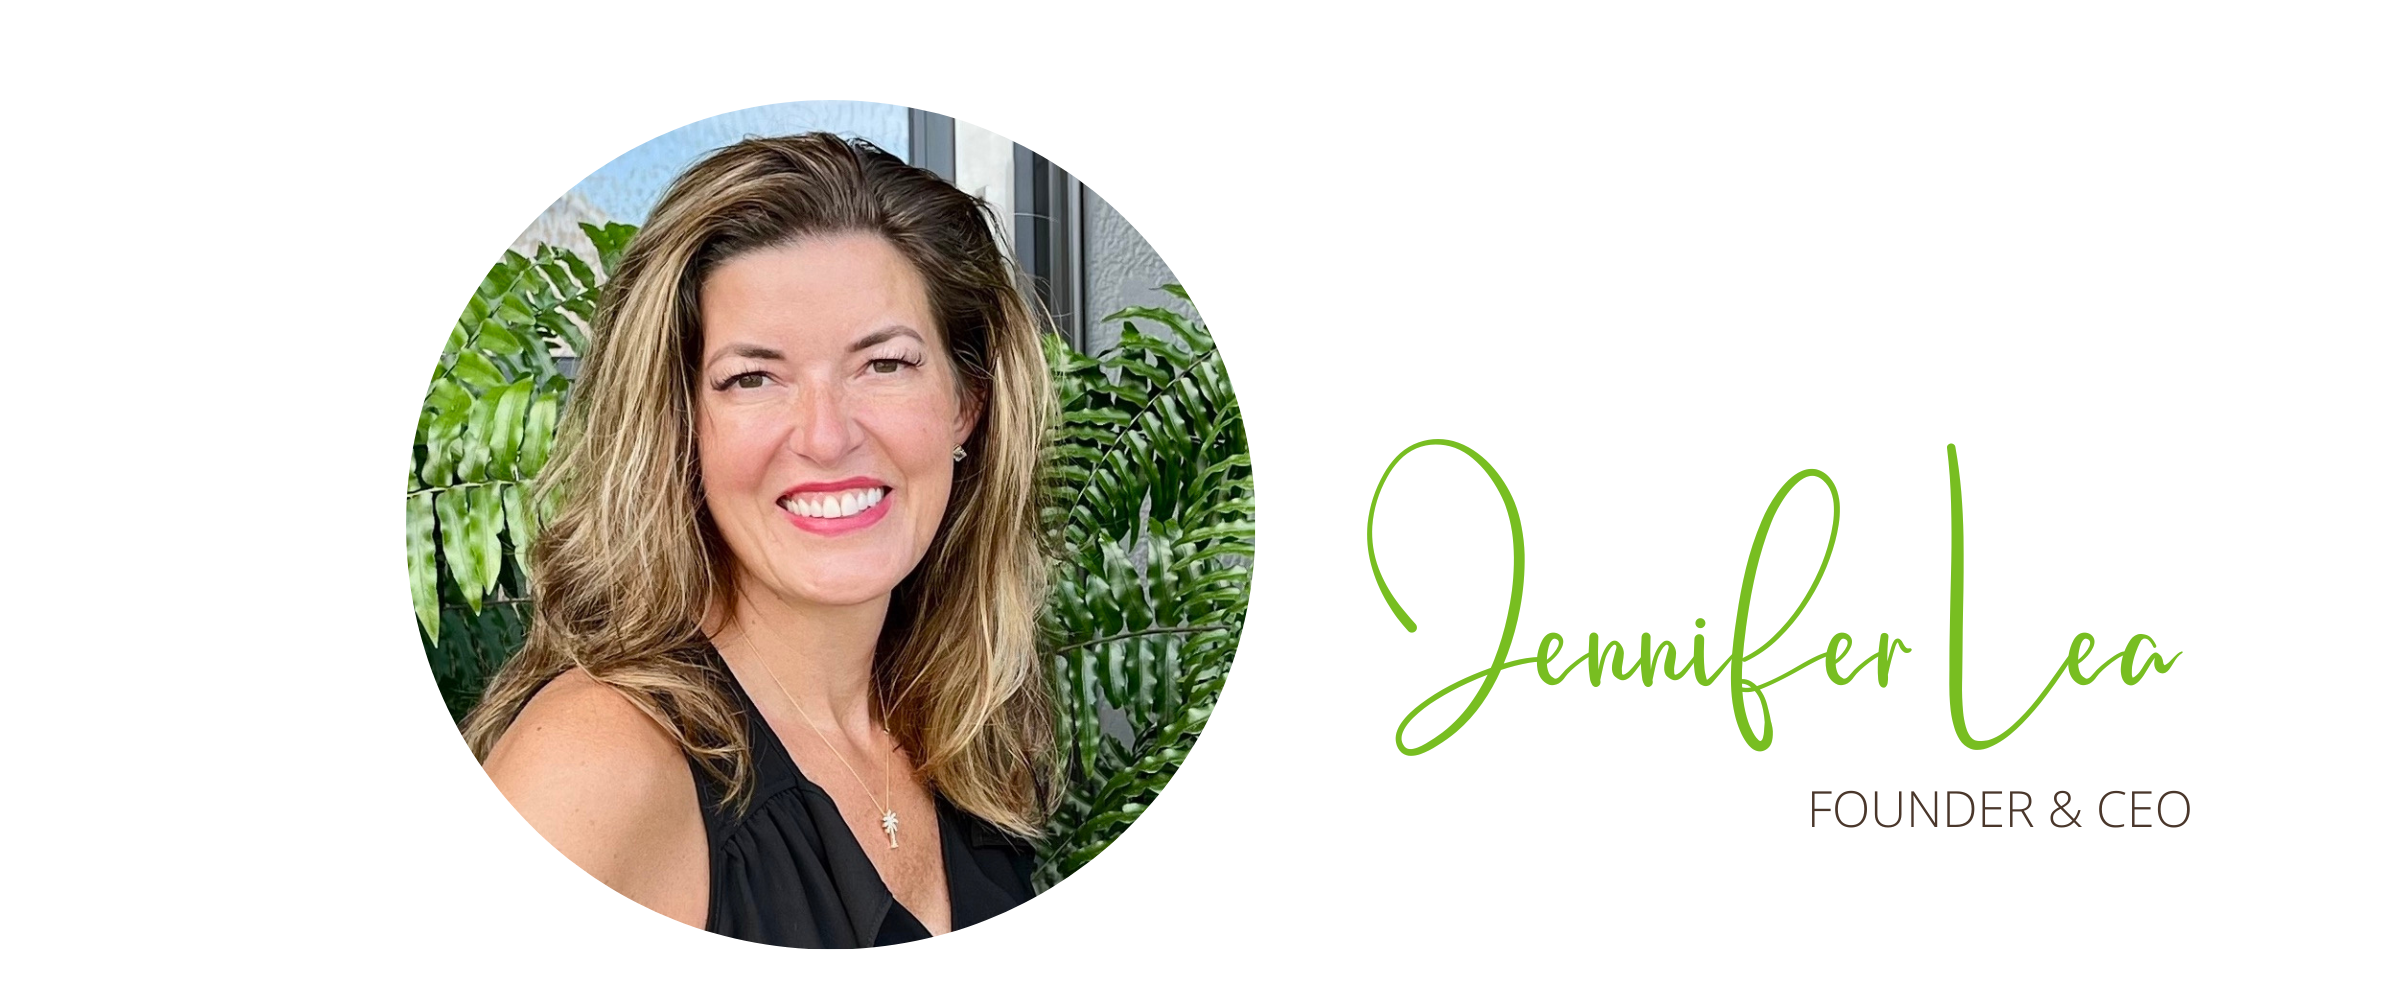 Jennifer Lea Founder & CEO Entry Envy